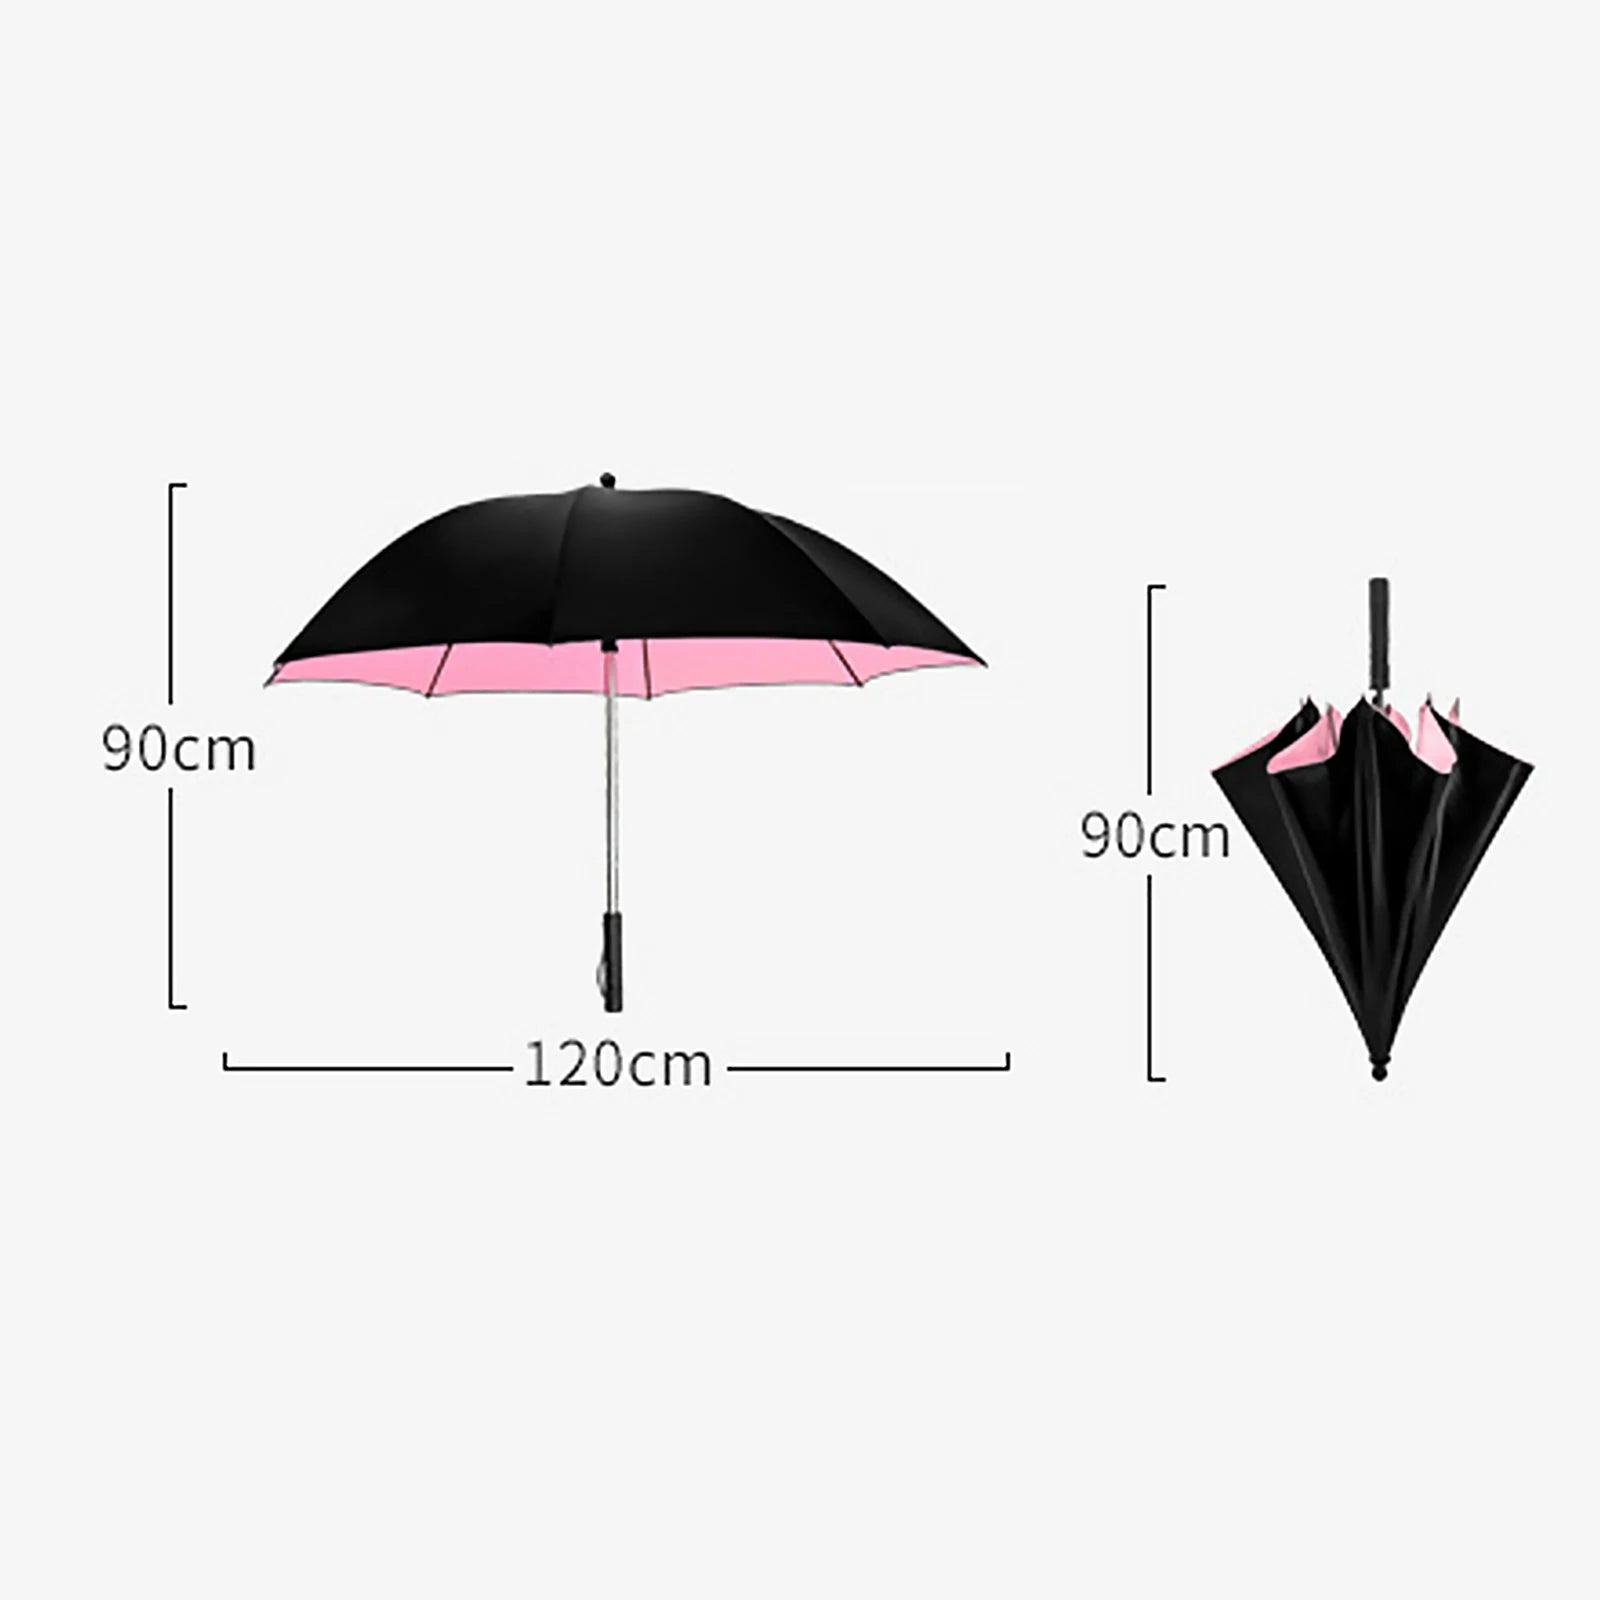 Portable Umbrella with Fan, UV Sun Umbrella, Safety Isolation Mesh, Super Wind Power, USB Rechargeable, 2600Mah